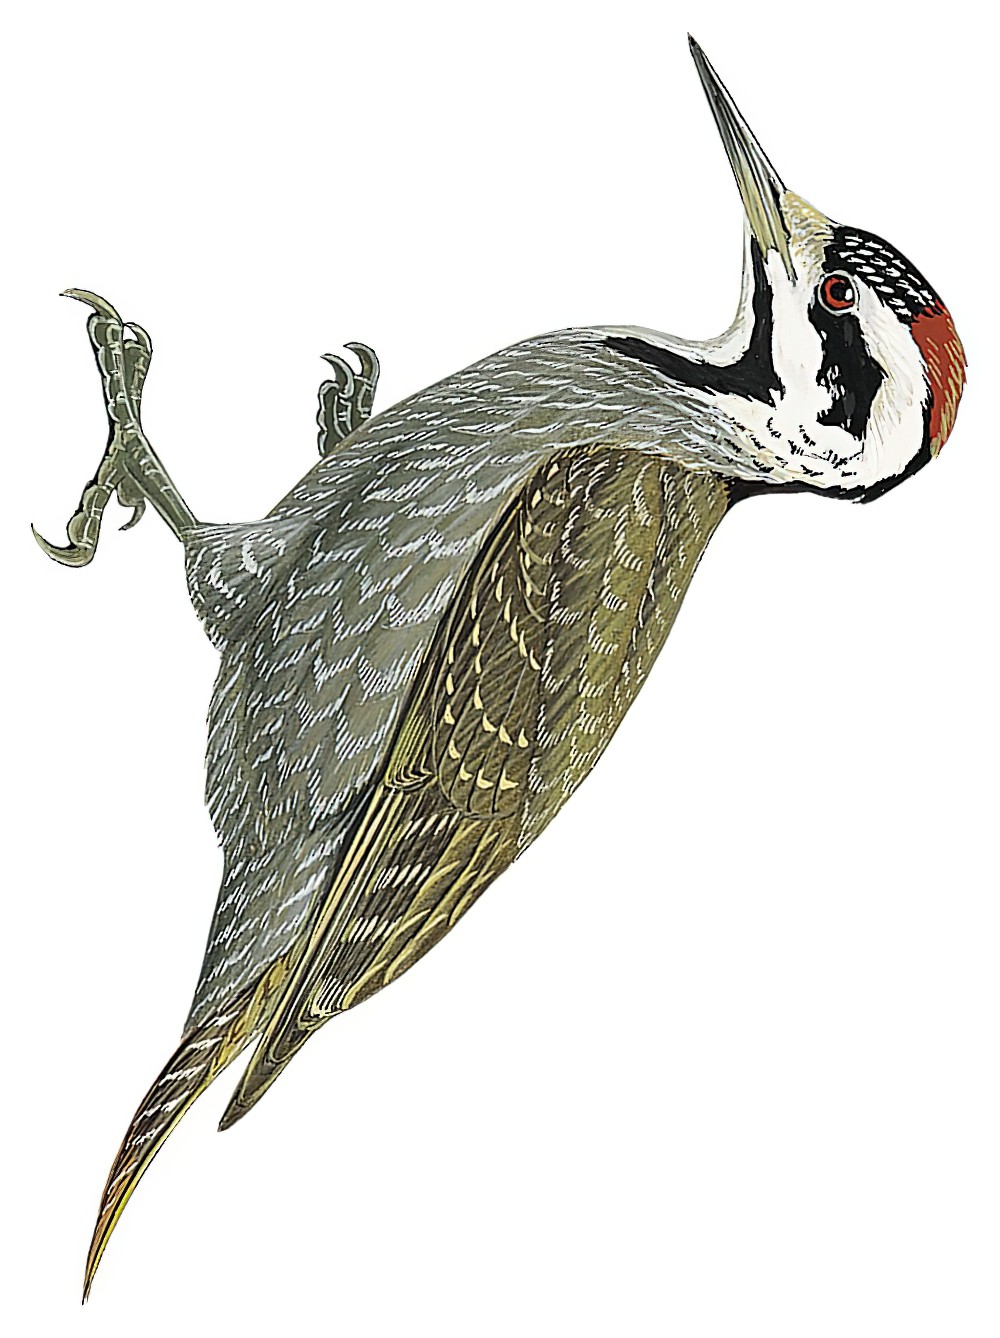 Bearded Woodpecker / Chloropicus namaquus